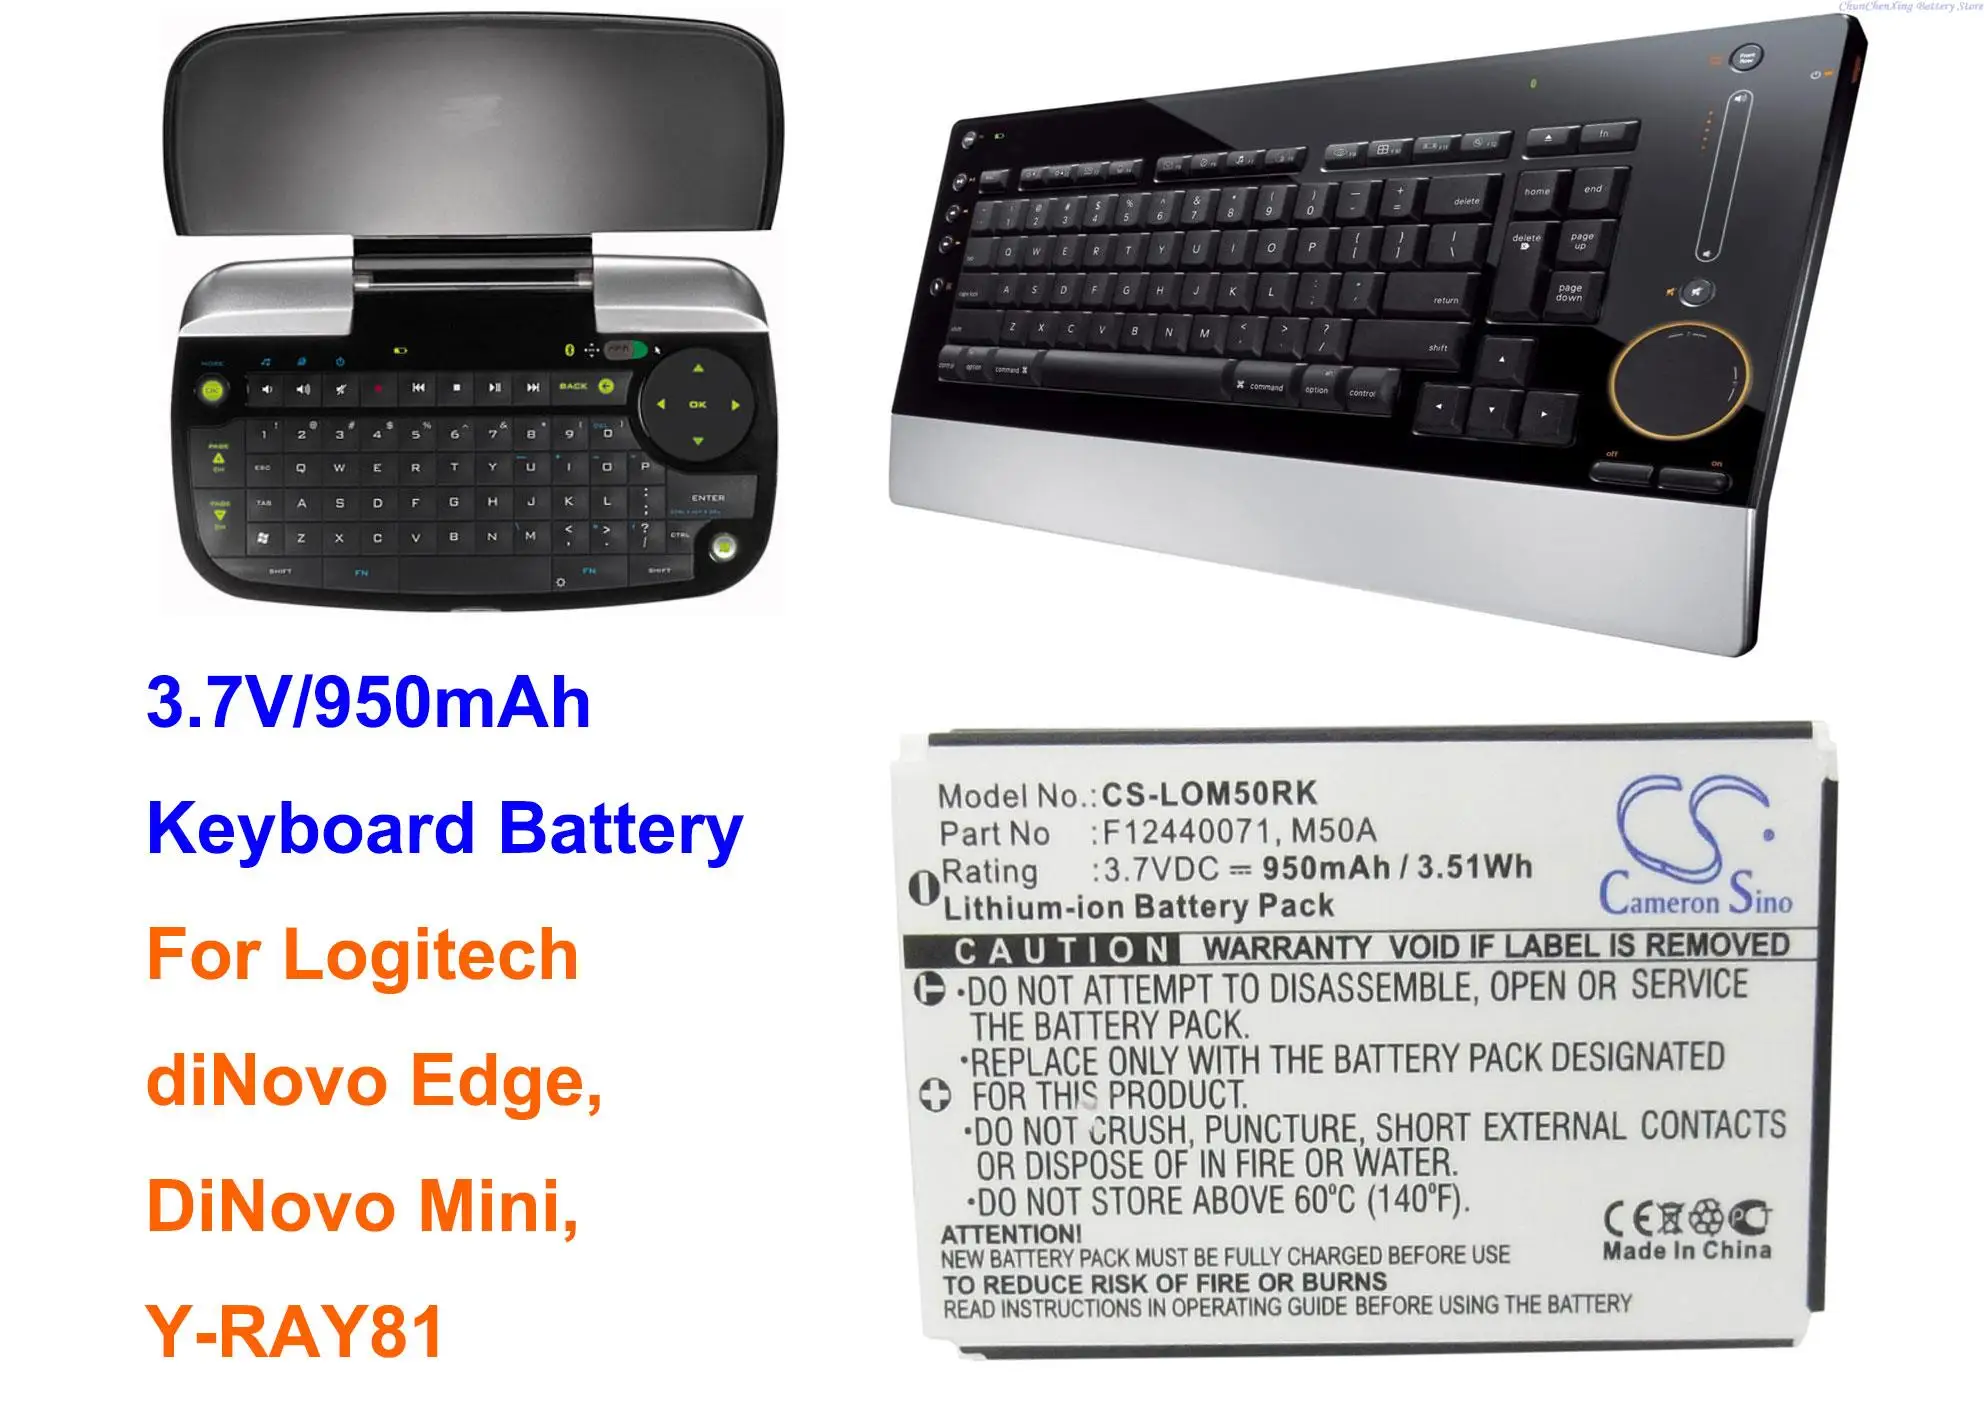 Cameron Sino 950mah Keyboard Battery M50a 190304-2004 F12440071 For Logitech  Dinovo Edge, Dinovo Mini, Y-ray81 - Digital Batteries - AliExpress